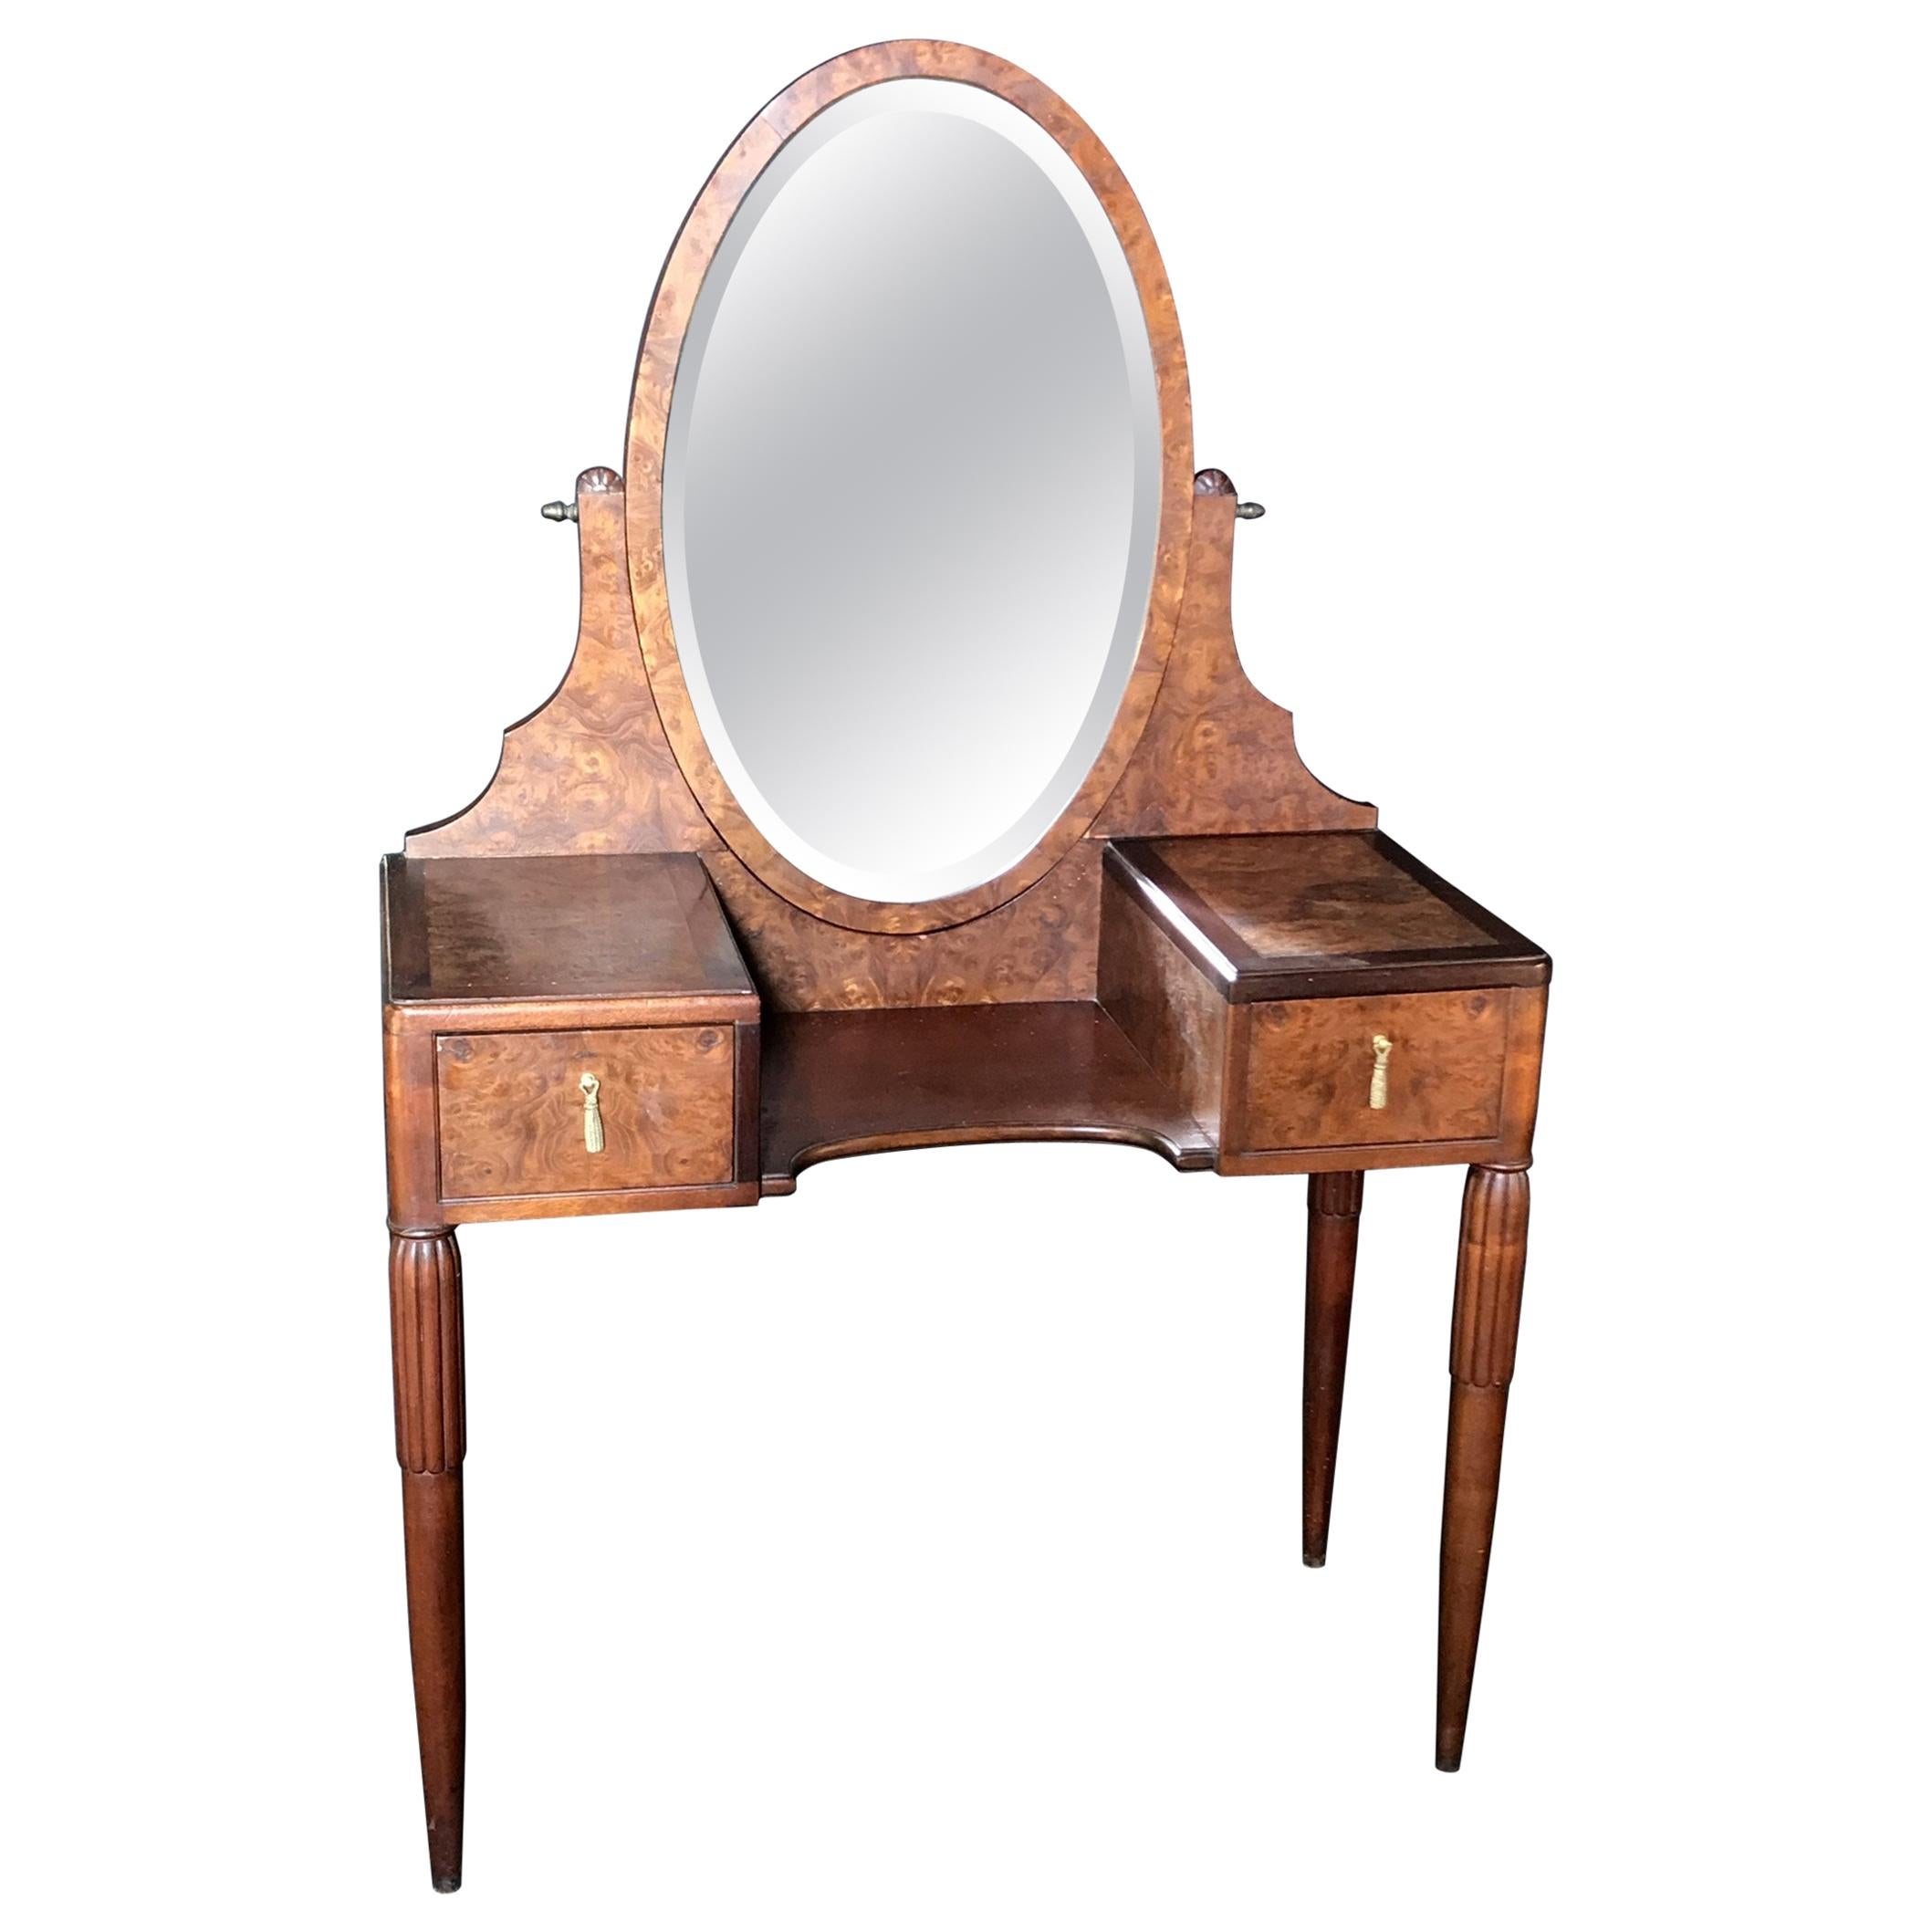 Elegant French Burled Walnut Dressing Table Vanity with Beveled Mirror